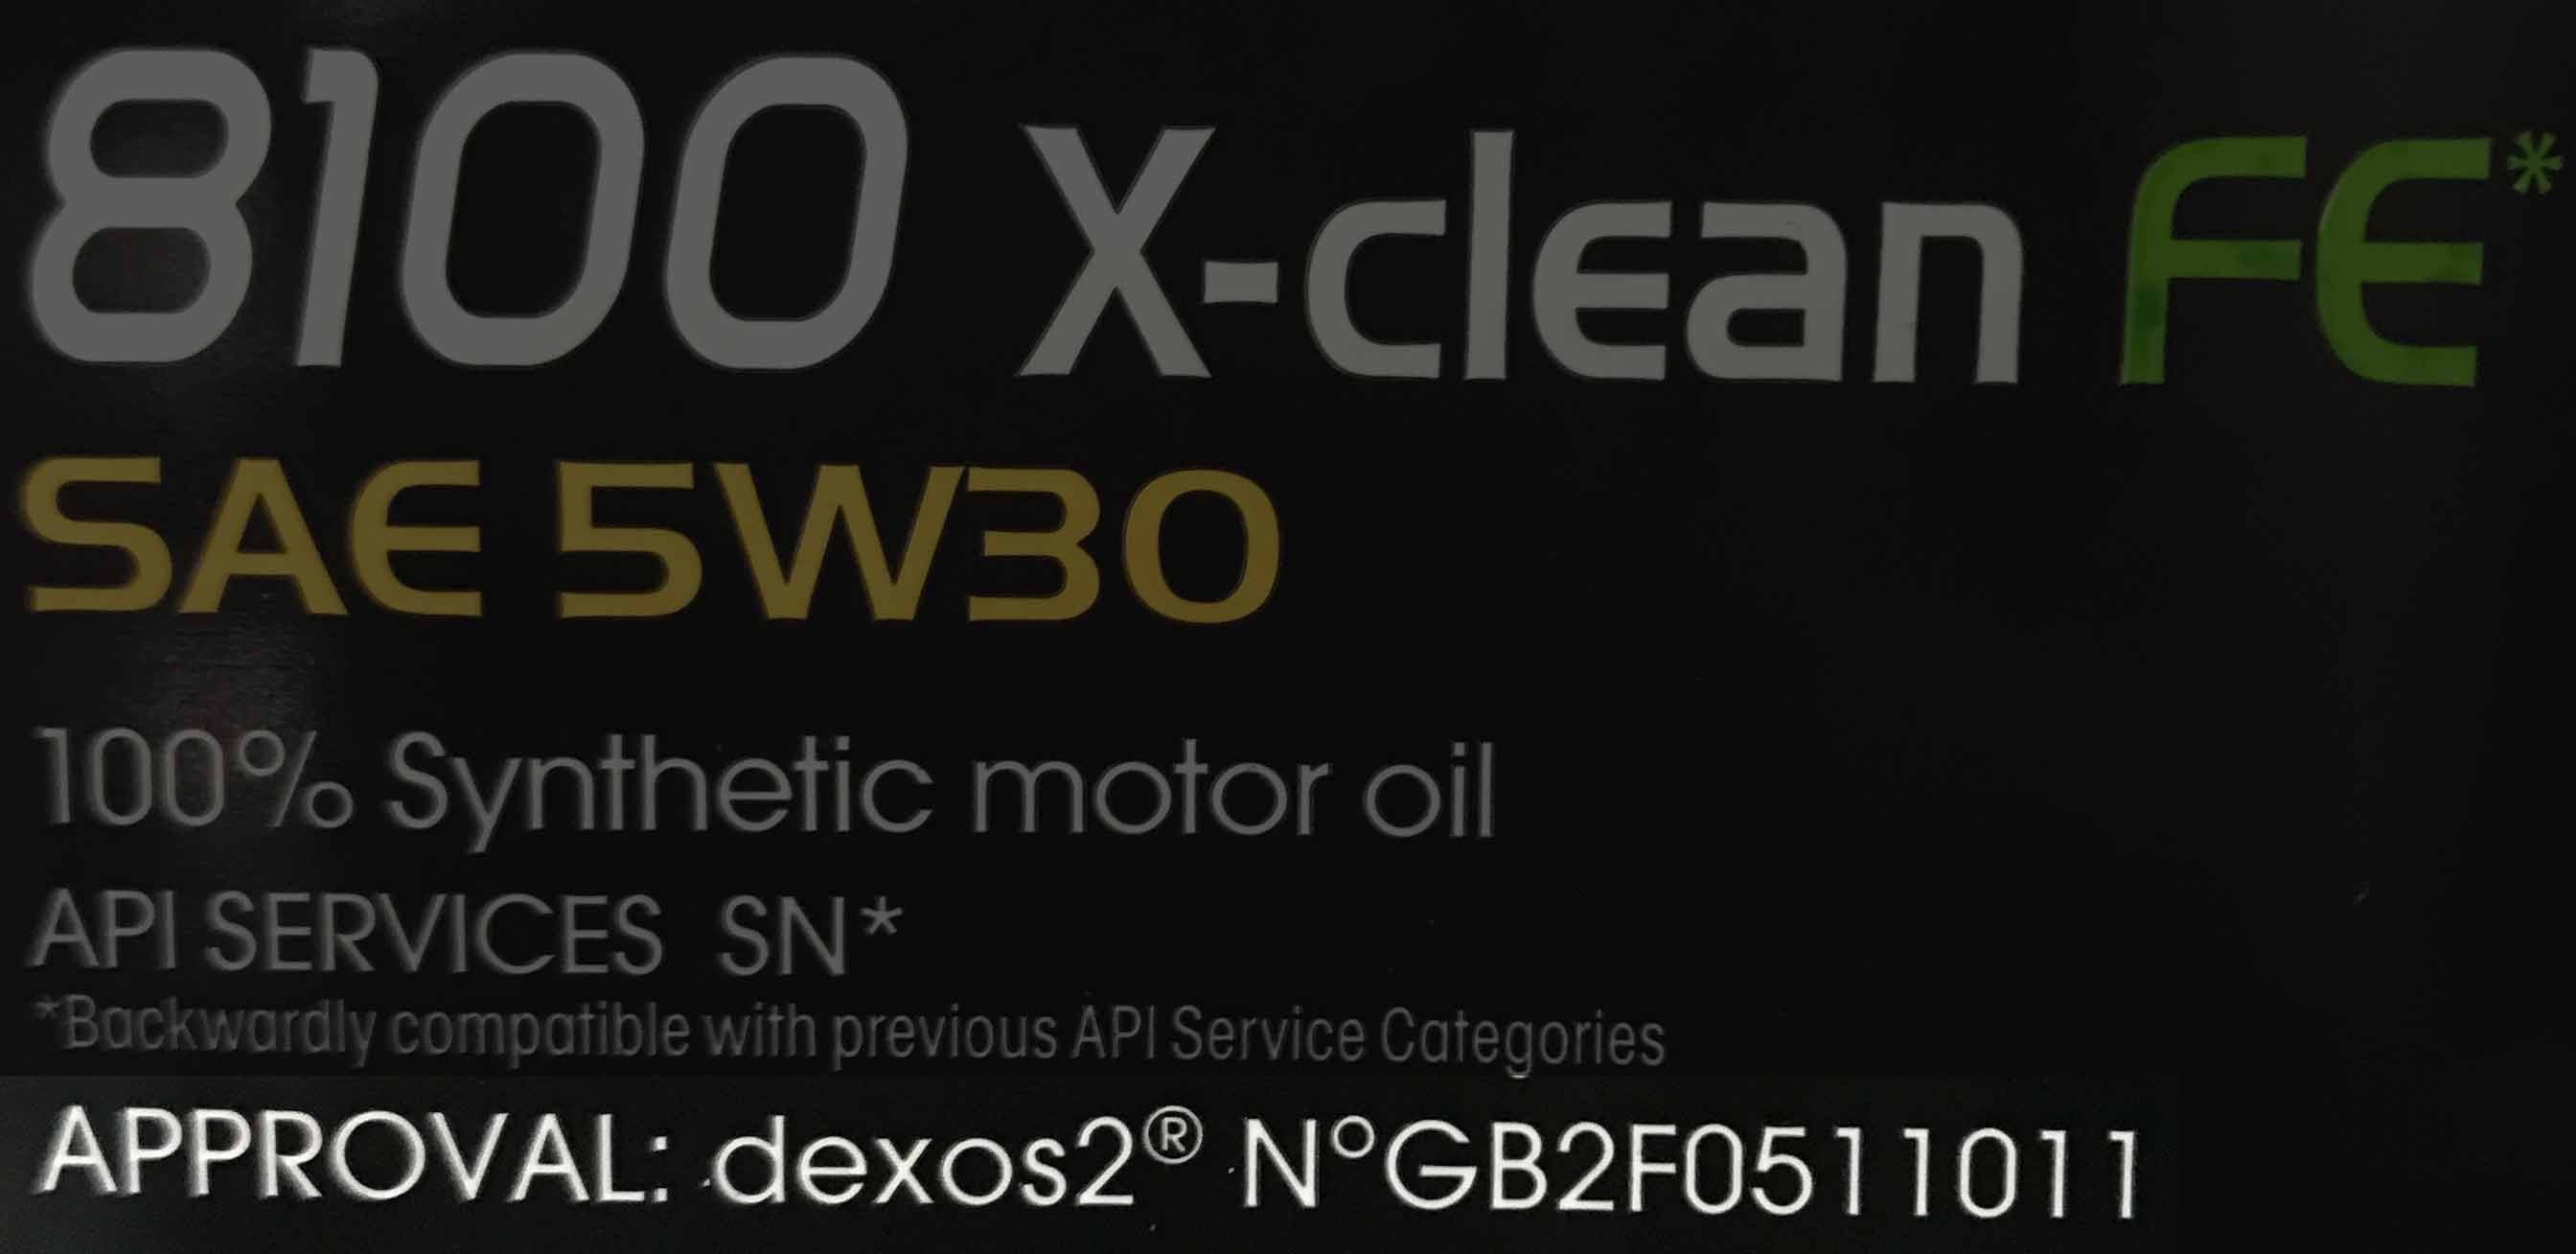 Dexos2 motul 8100 x-clean FE